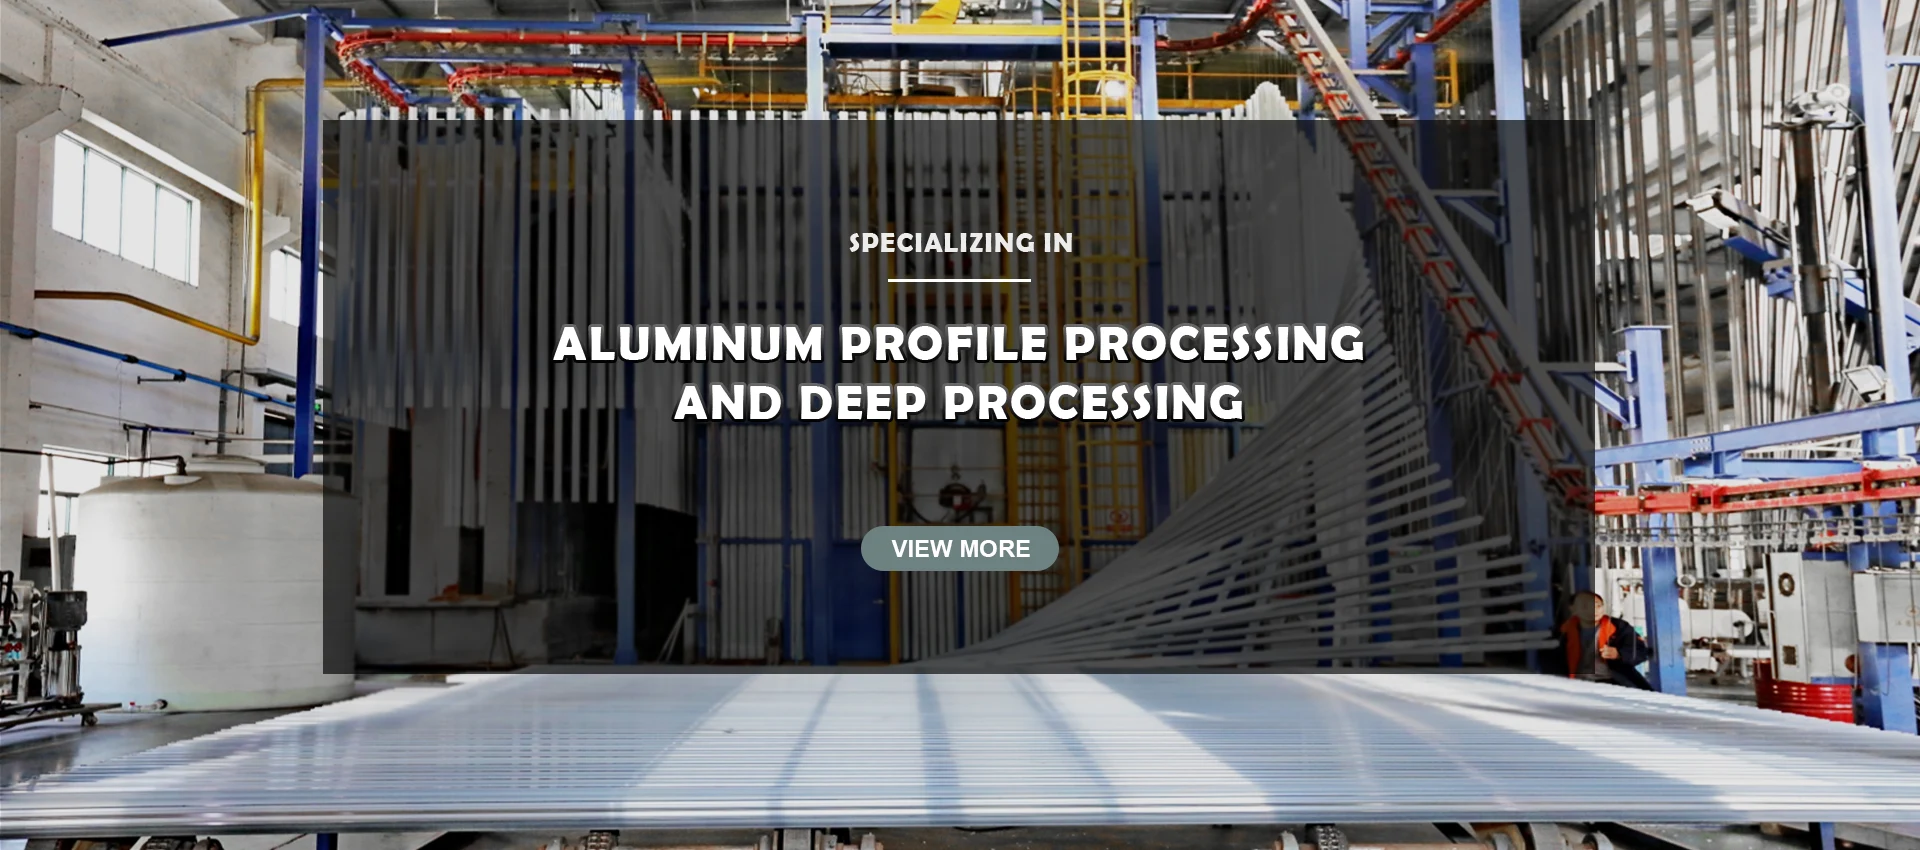 China Aluminium Profiles